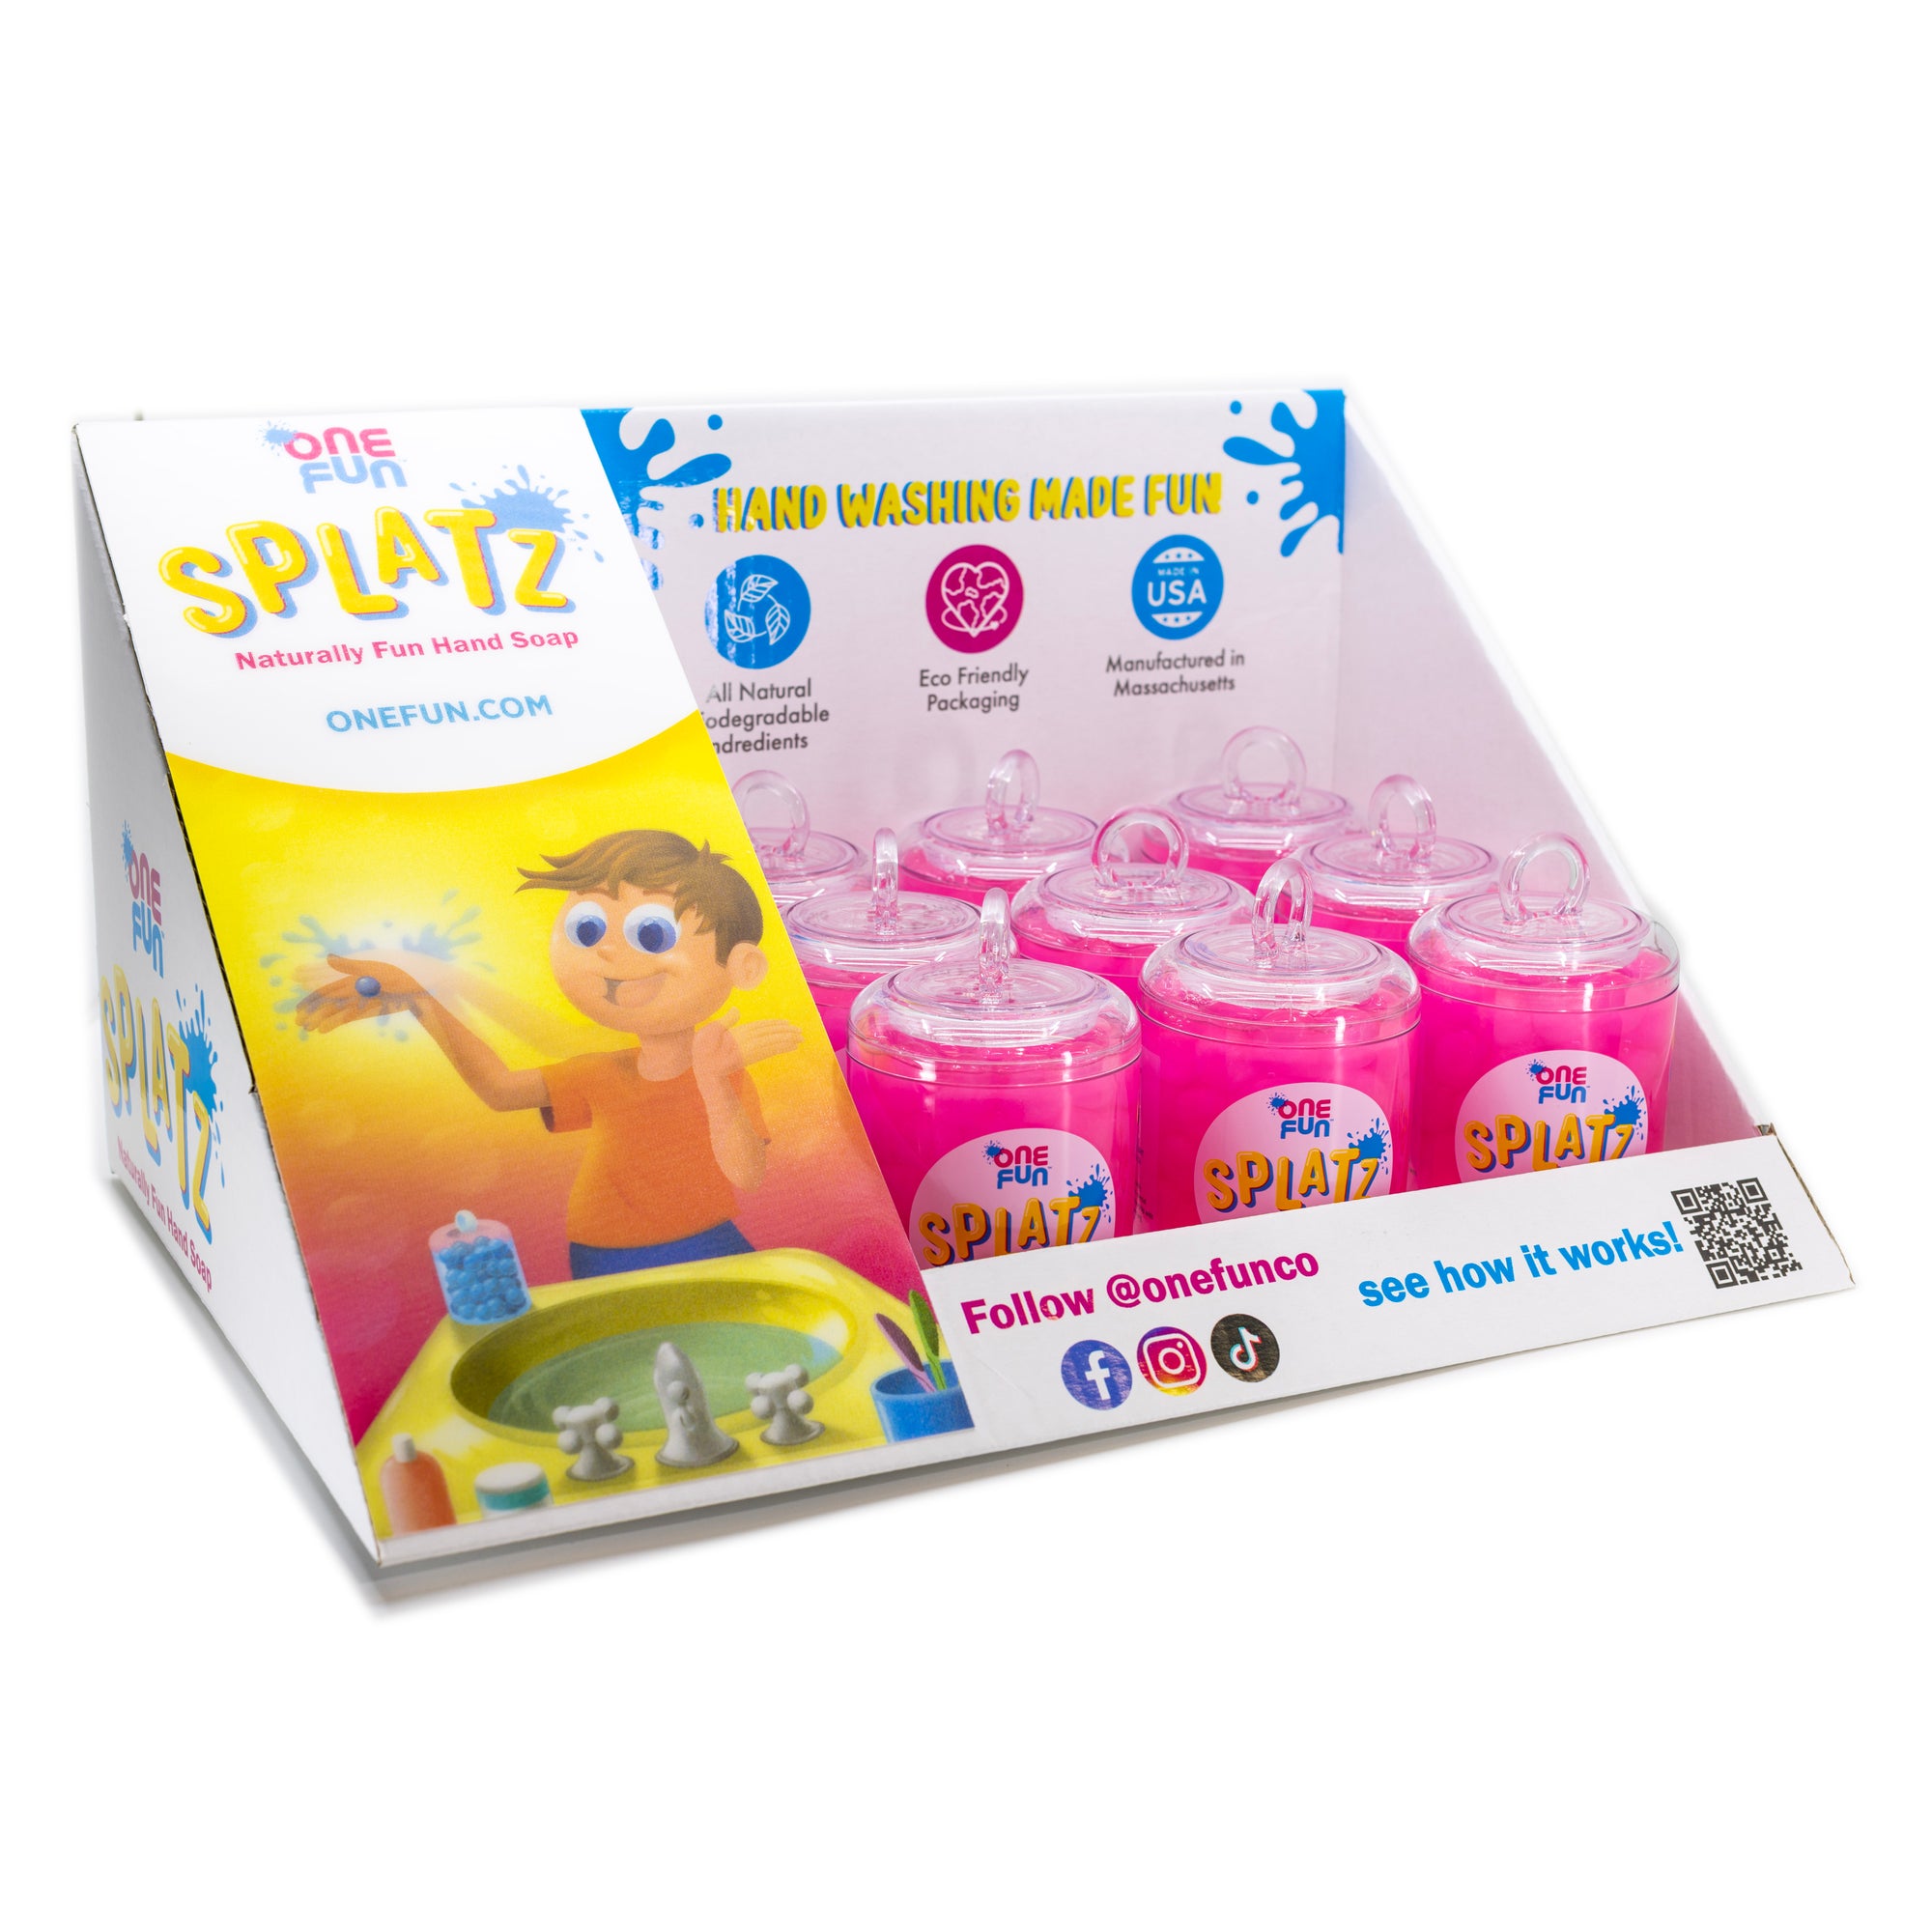 SPLATZ Naturally Fun Hand Soap & Counter Display (9 Hero Units)